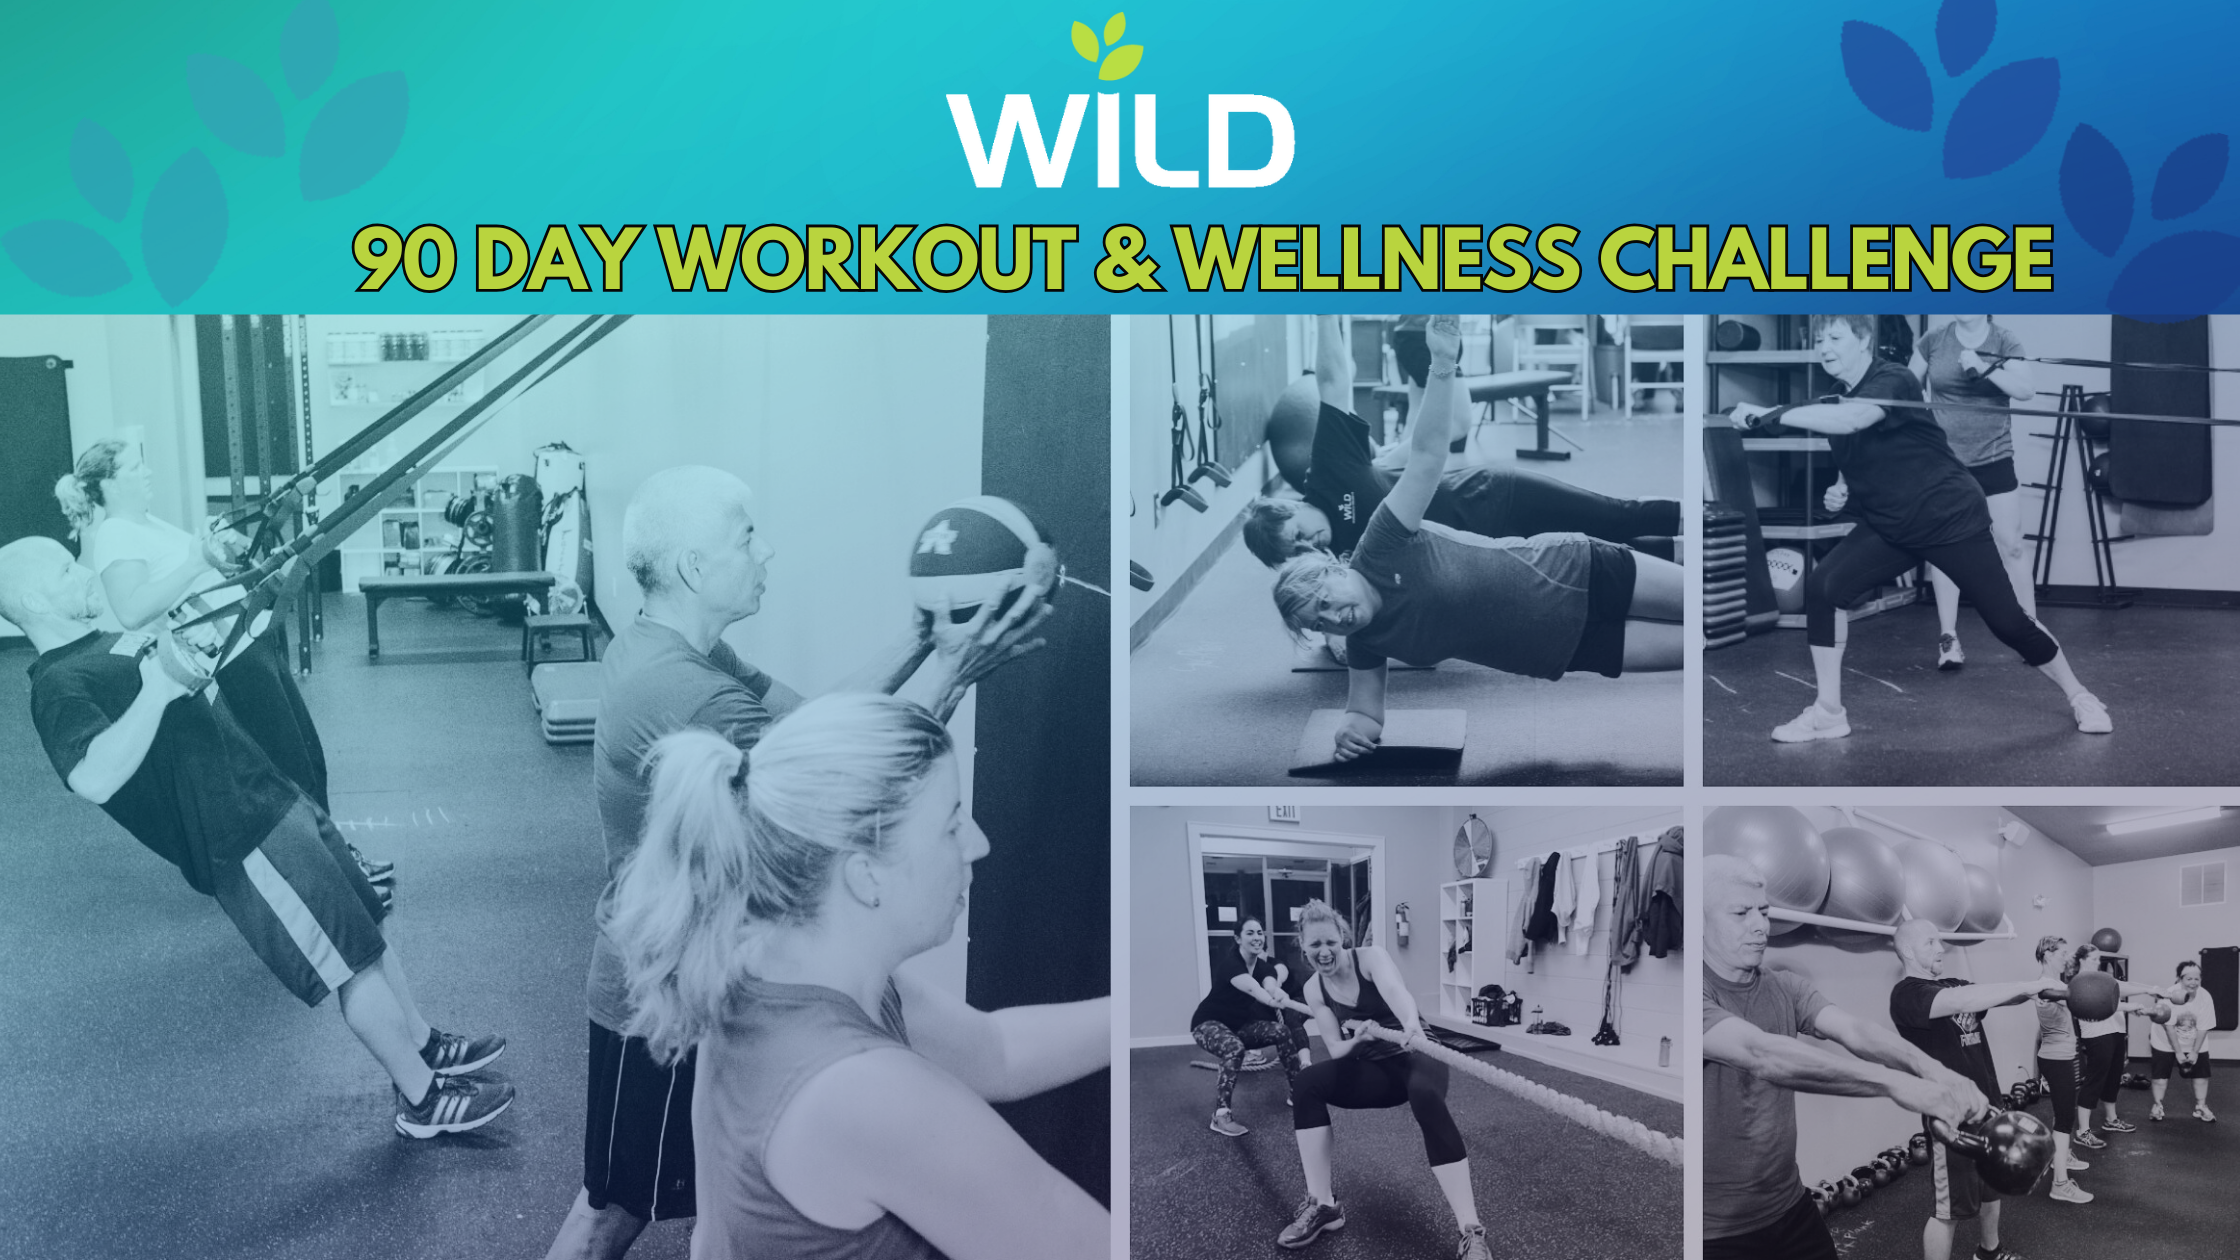 Wild’s 90 Day Workout & Wellness Challenge